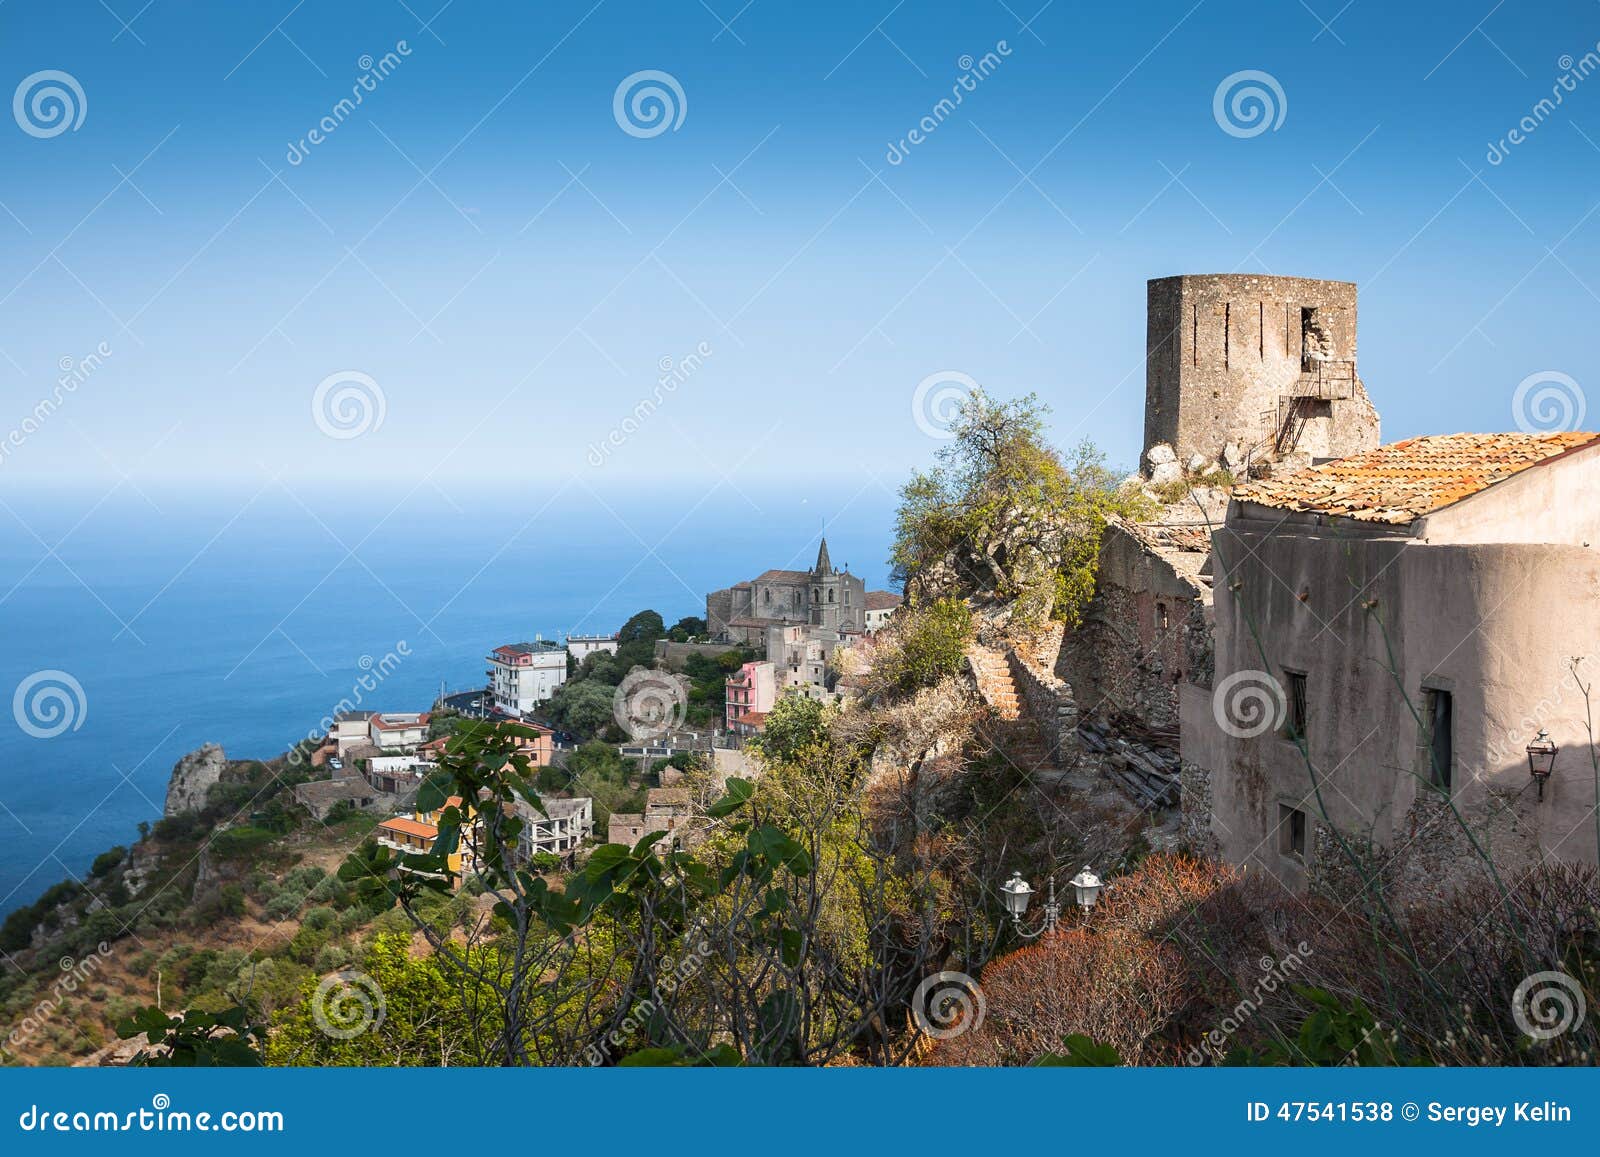 forza d'agro - sicilian historical city